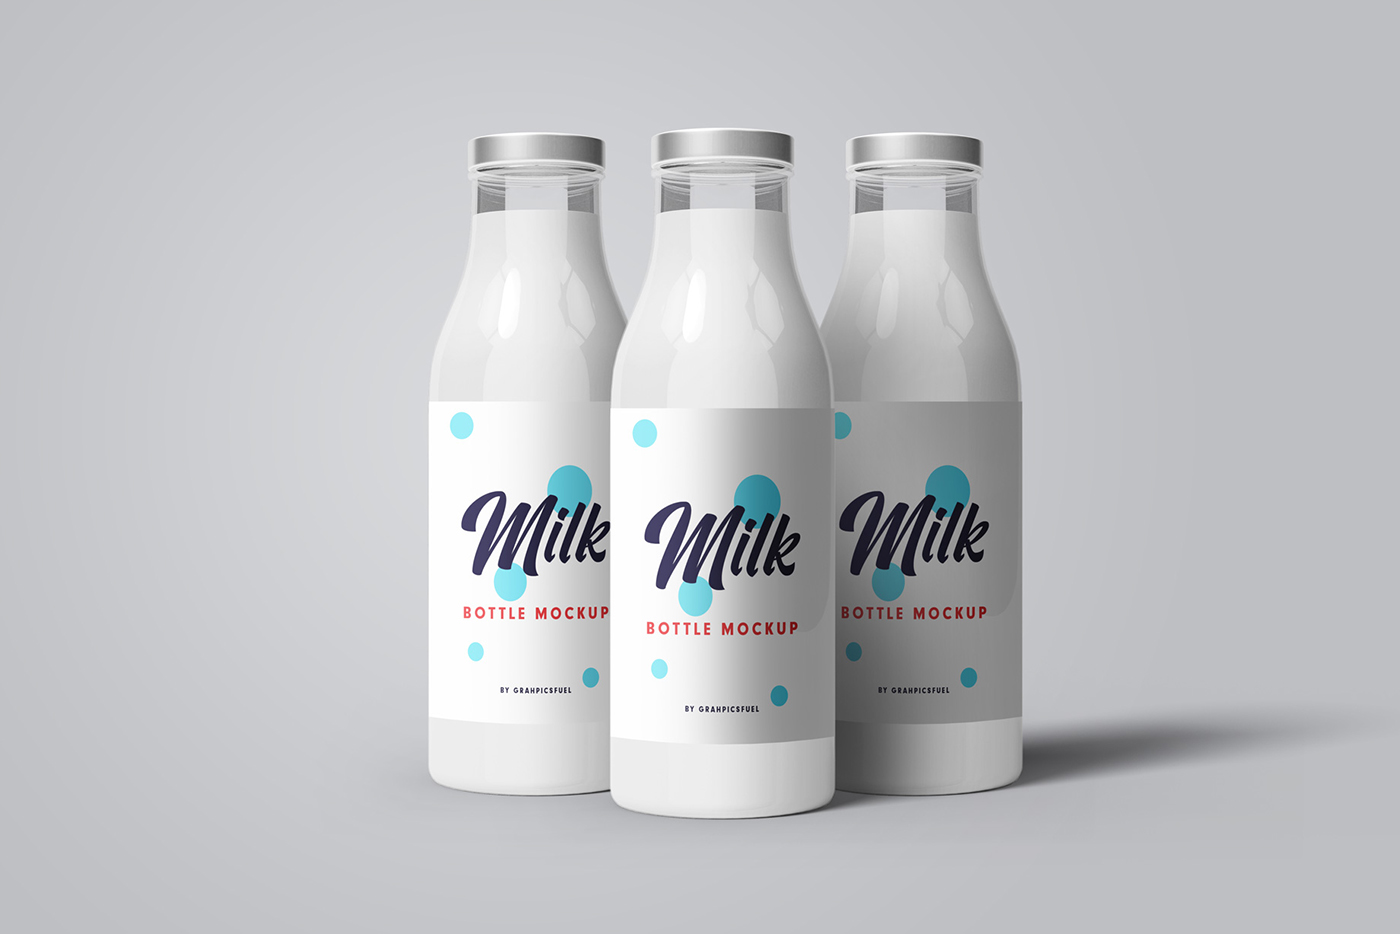 https://www.graphicsfuel.com/wp-content/uploads/2020/07/Milk-Bottle-Mockup-02.jpg